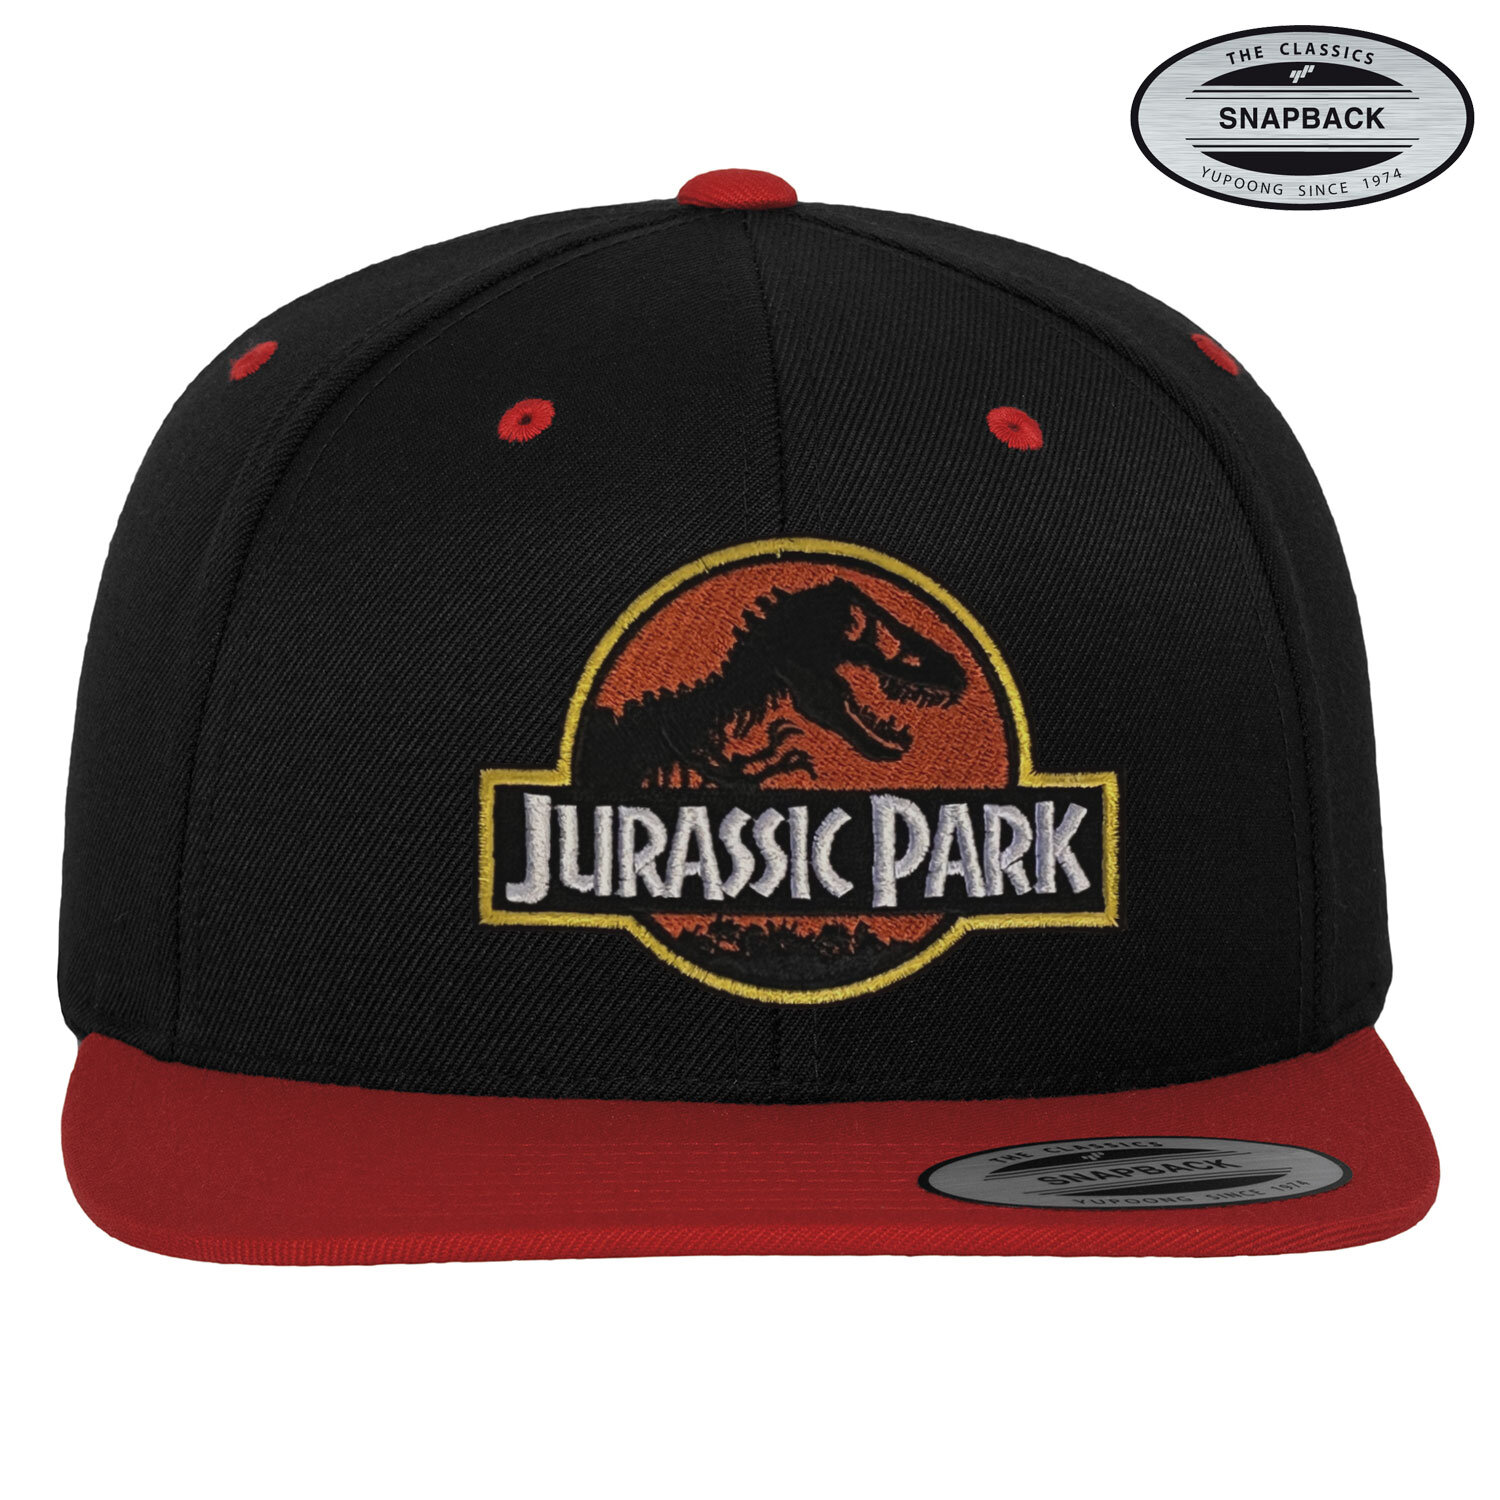 Jurassic Park Snapback Cap